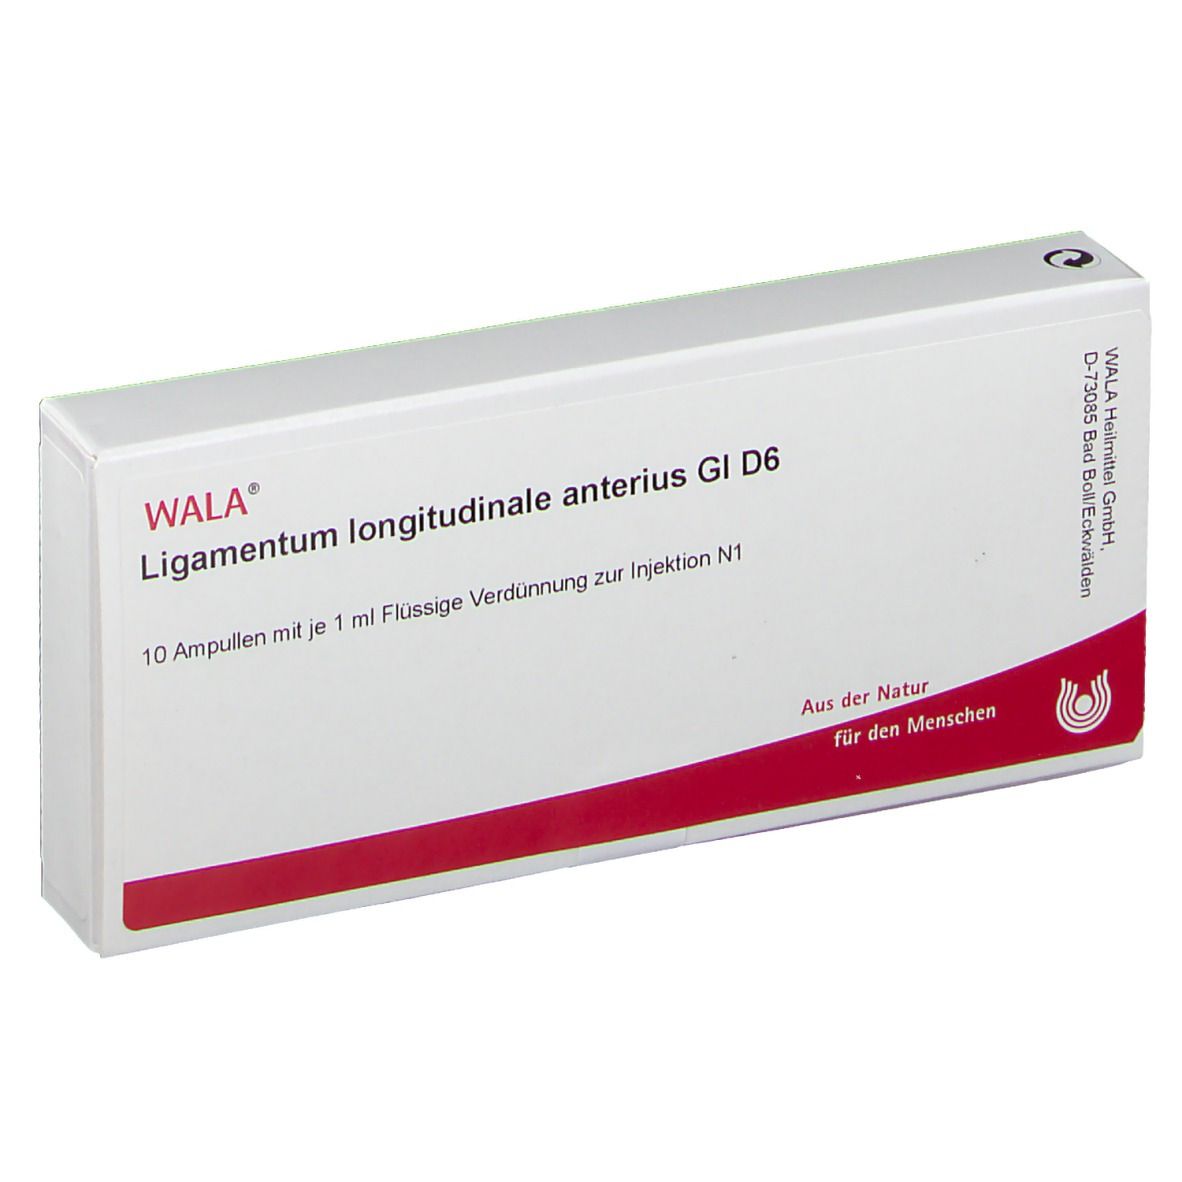 WALA® Ligamentum longitudinale anterius Gl D 6